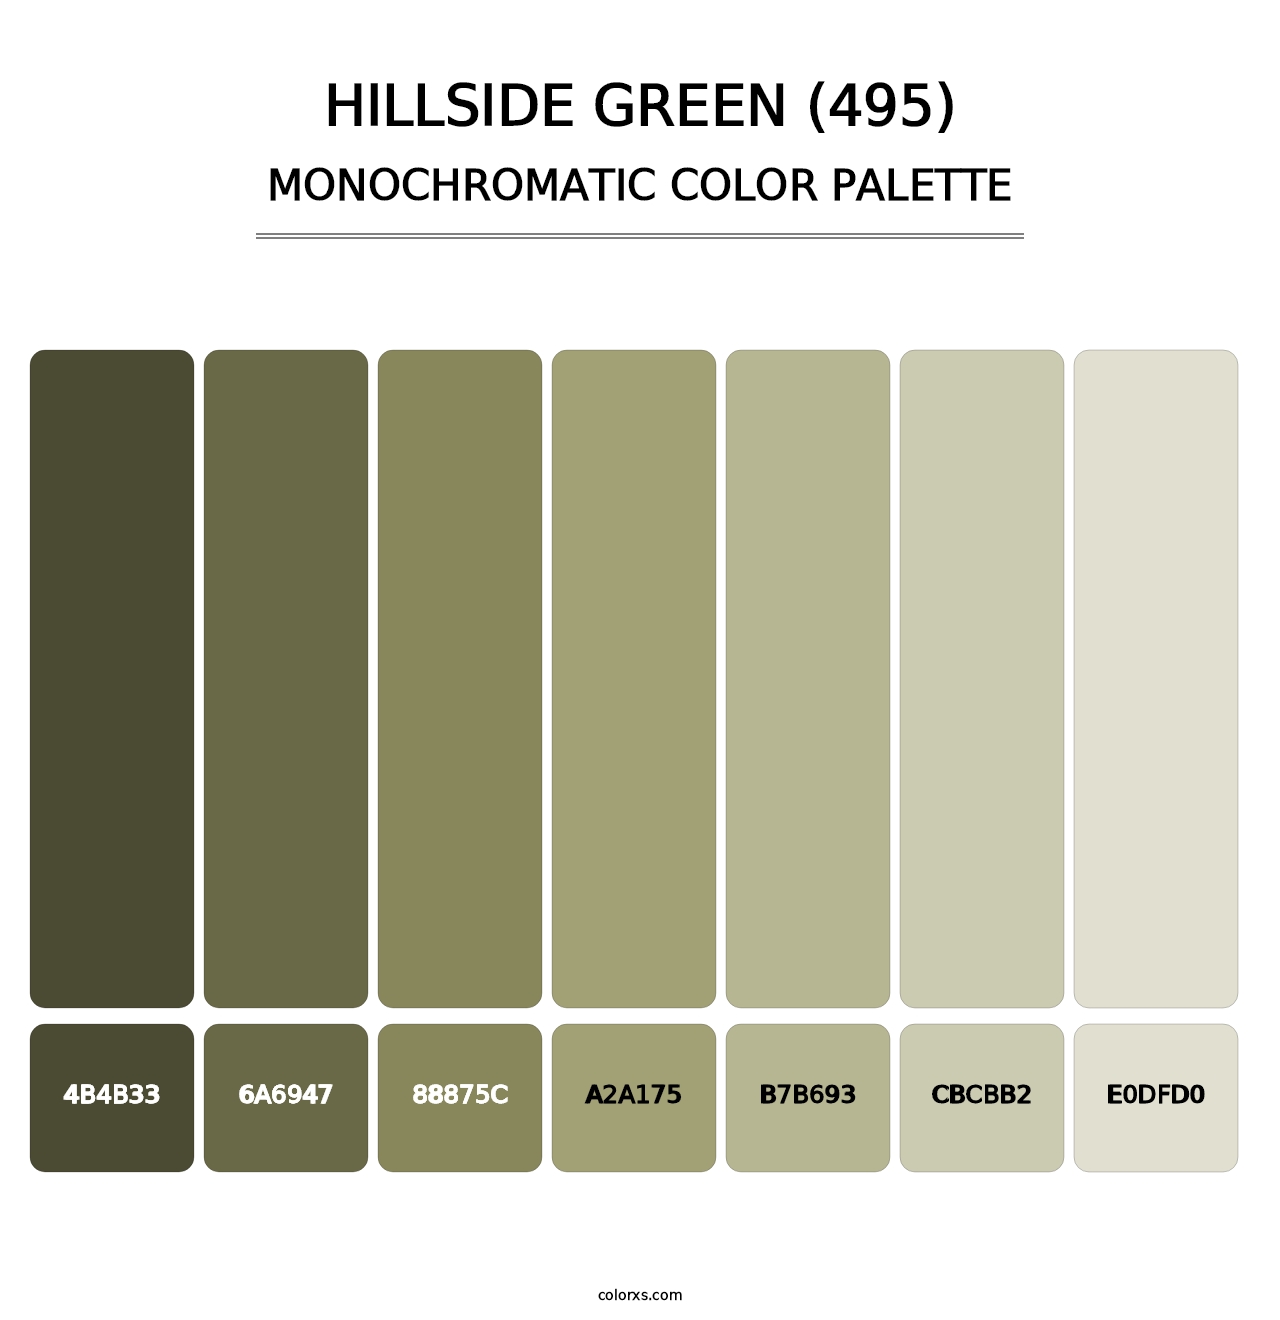 Hillside Green (495) - Monochromatic Color Palette